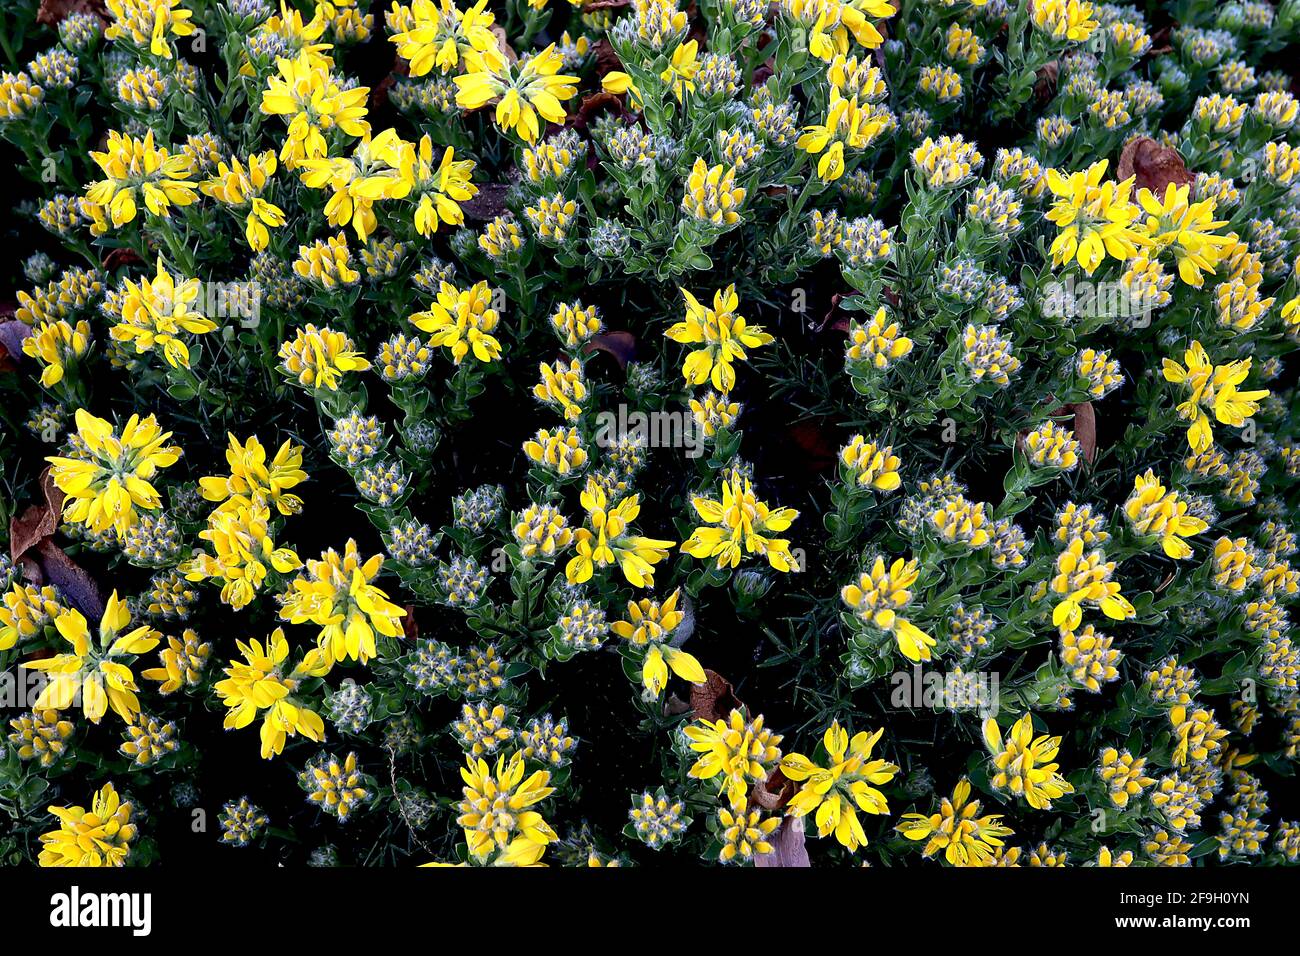 Ulex europaeus common gorse – masa de flores doradas de color amarillo arveja en medio de hojas de color verde oscuro espinoso, abril, Inglaterra, Reino Unido Foto de stock